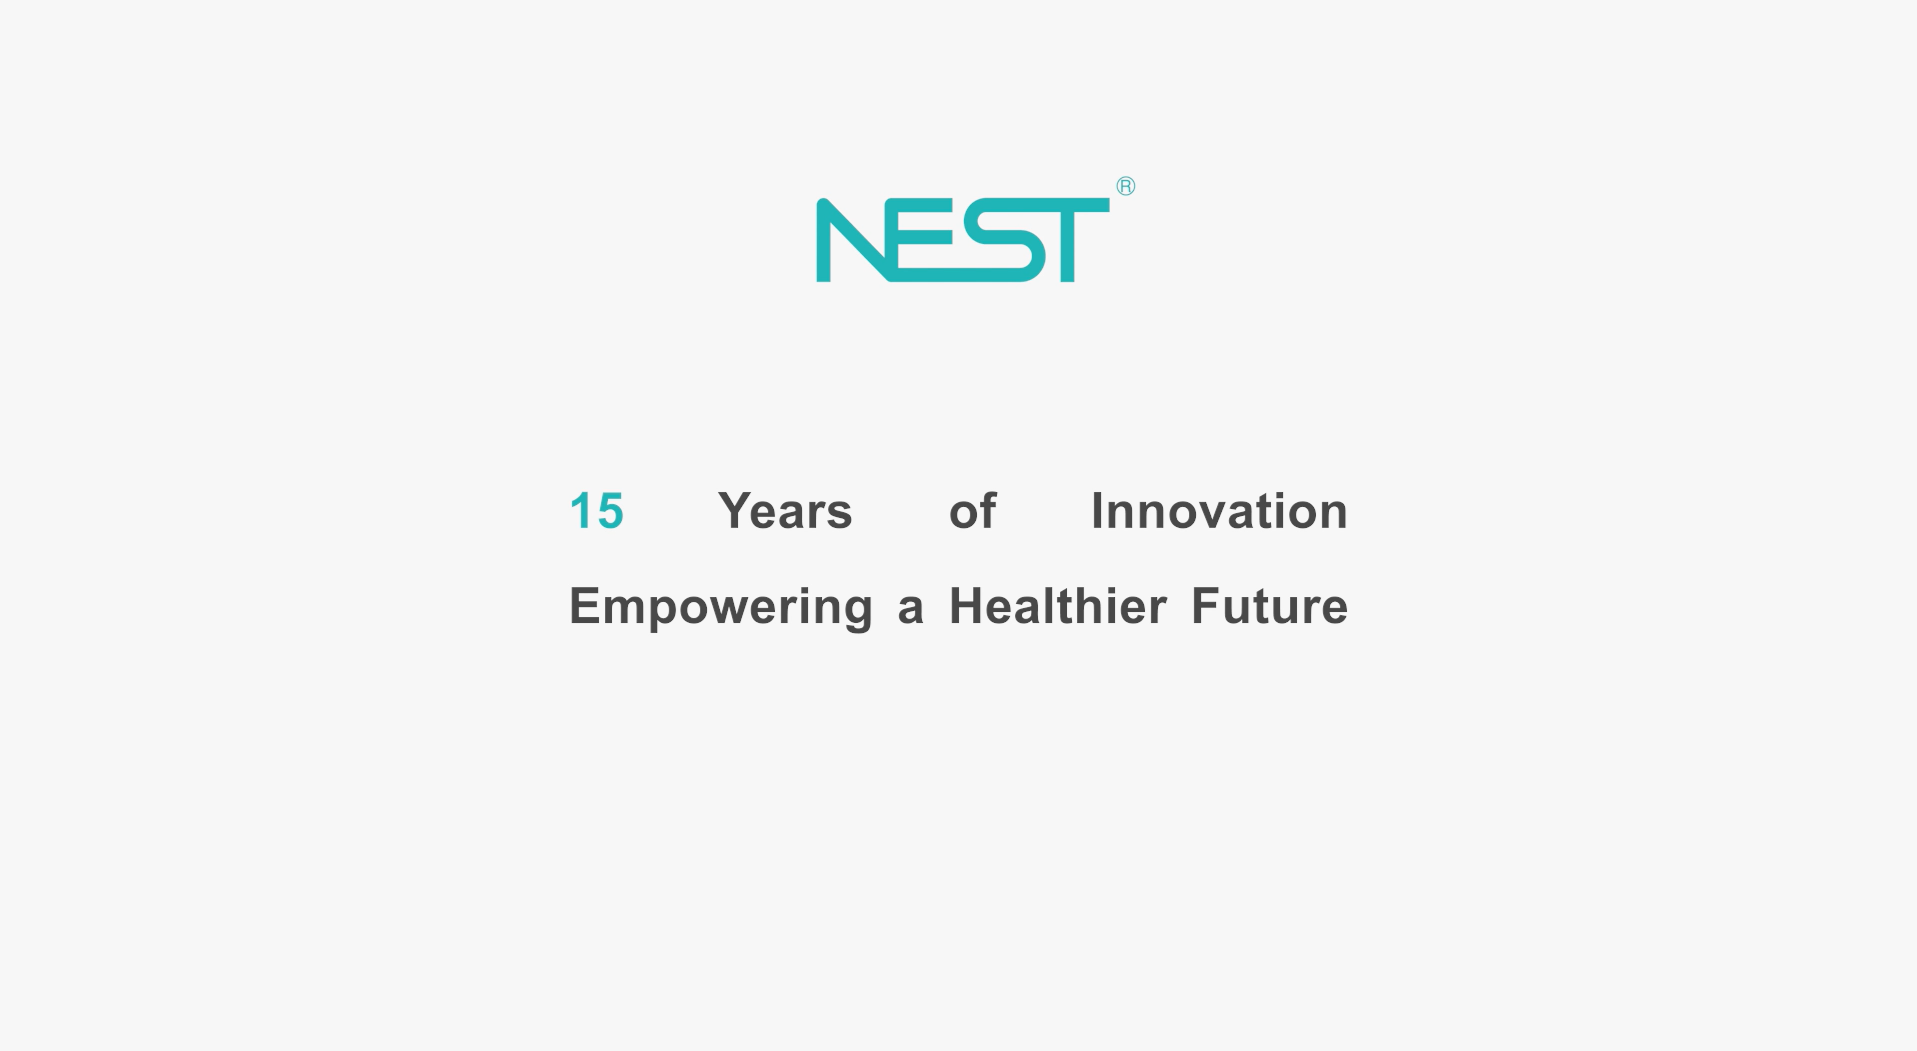 Nests innovative 15 Jahre